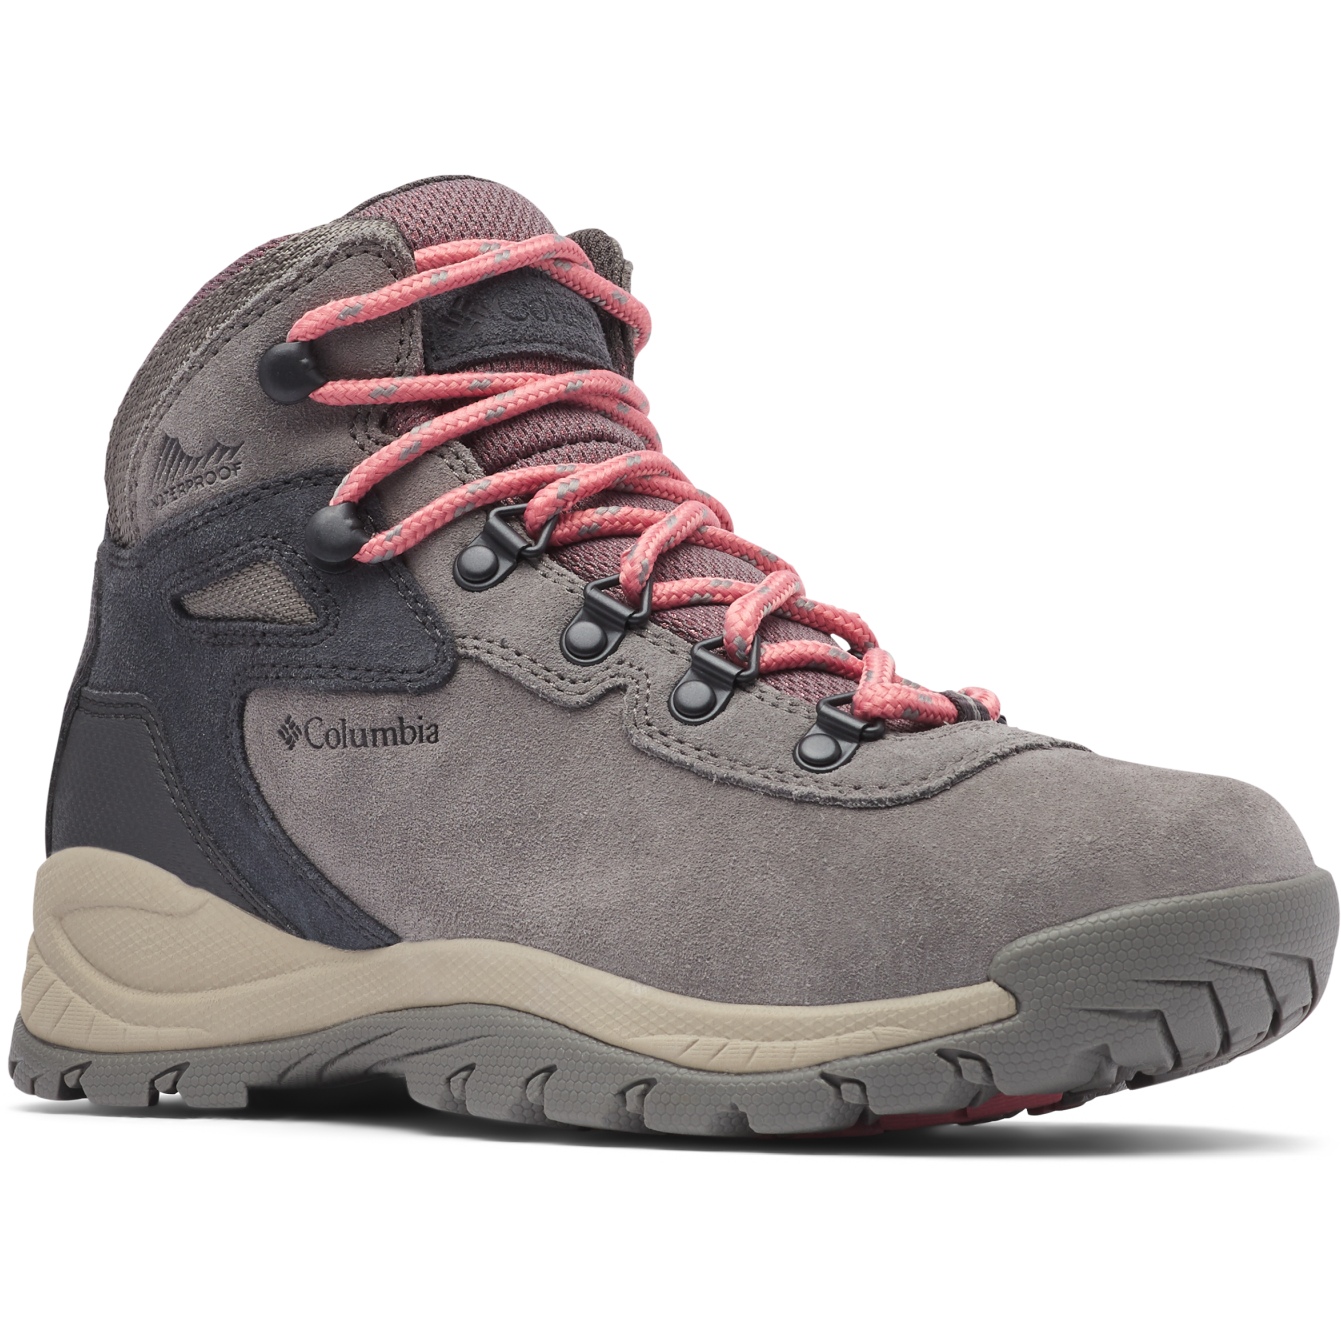 Picture of Columbia Newton Ridge Plus Amped Waterproof Hiking Shoes Women - Stratus/Canyon Rose